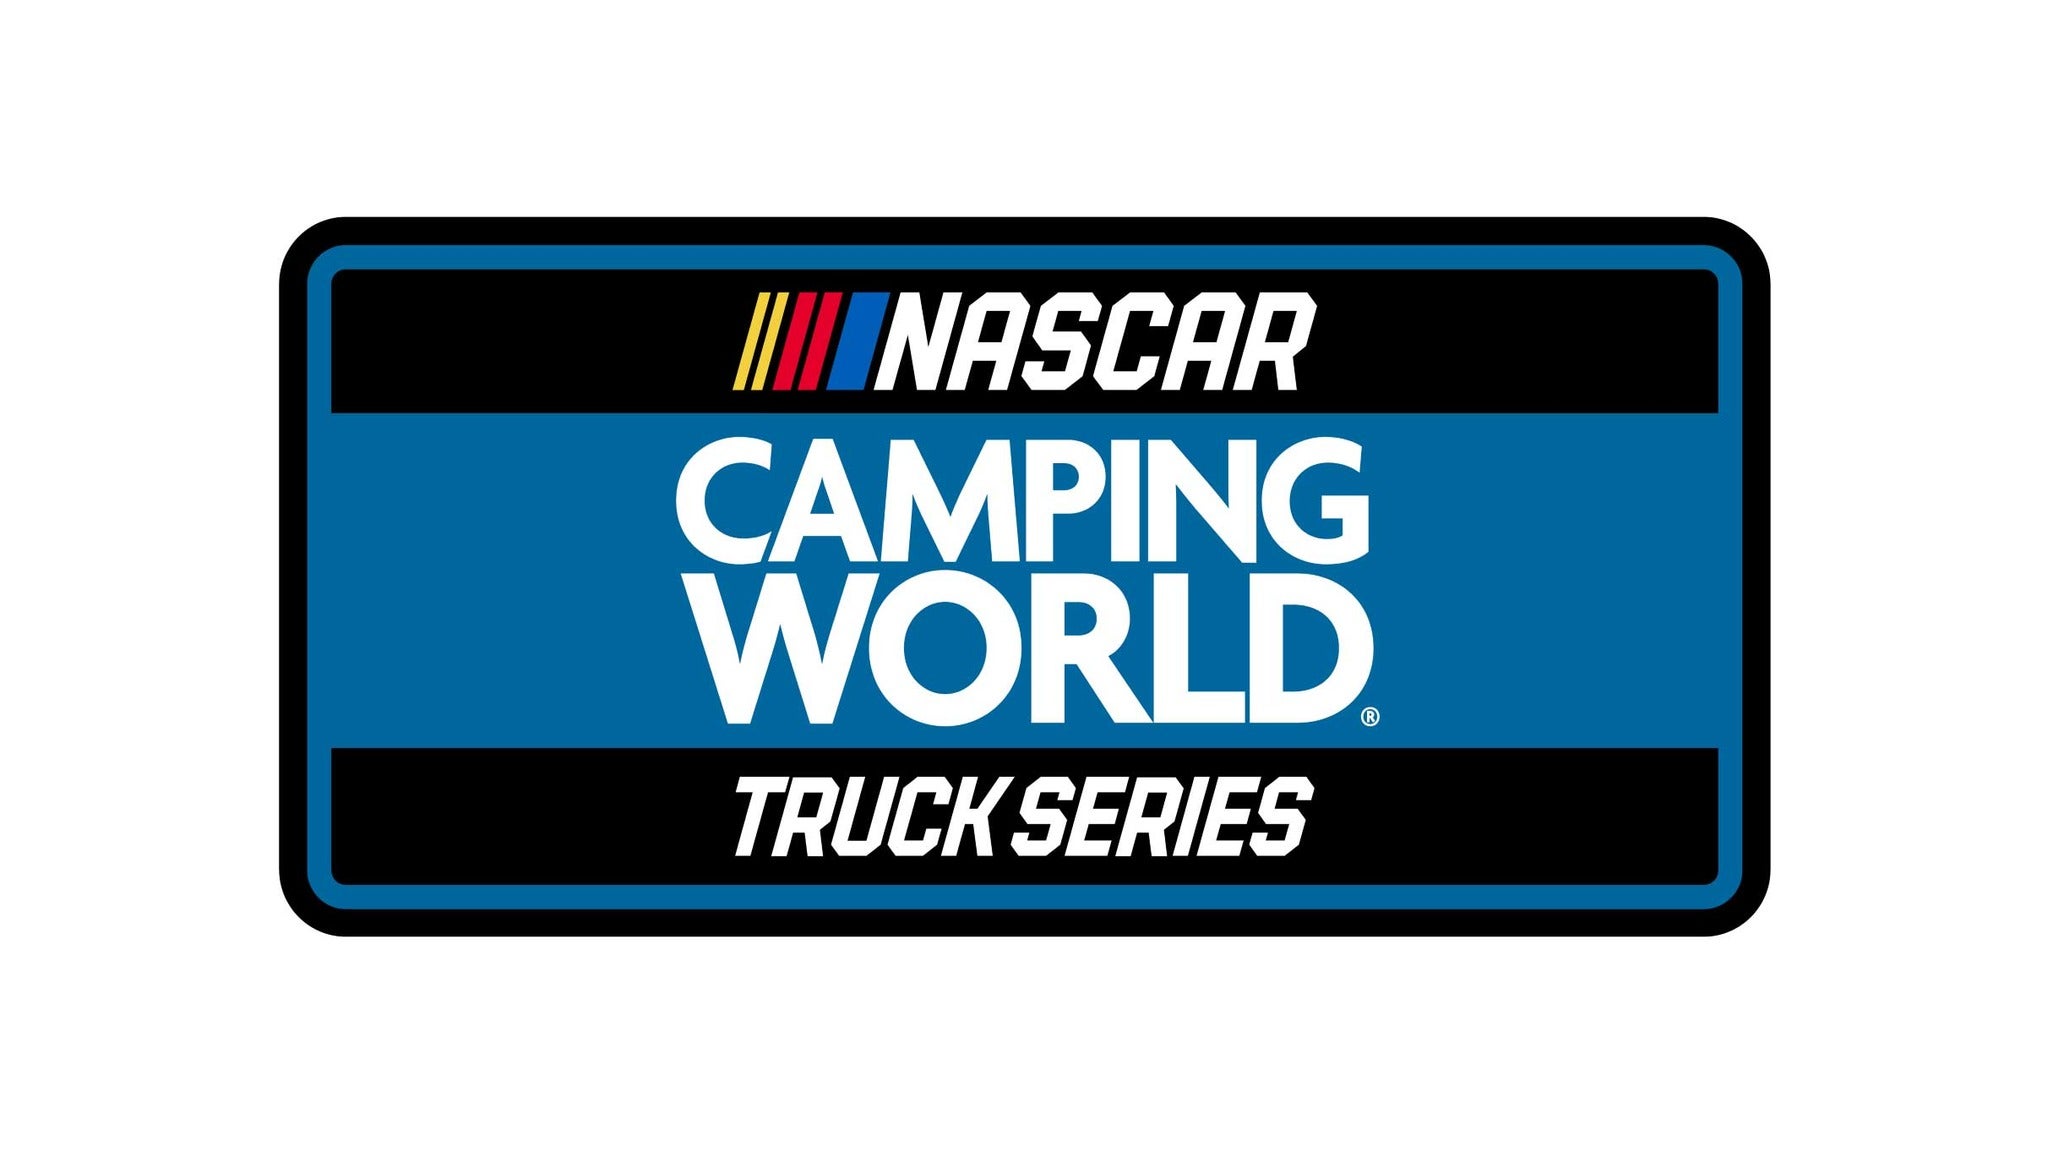 NASCAR Camping World Truck Series presale information on freepresalepasswords.com